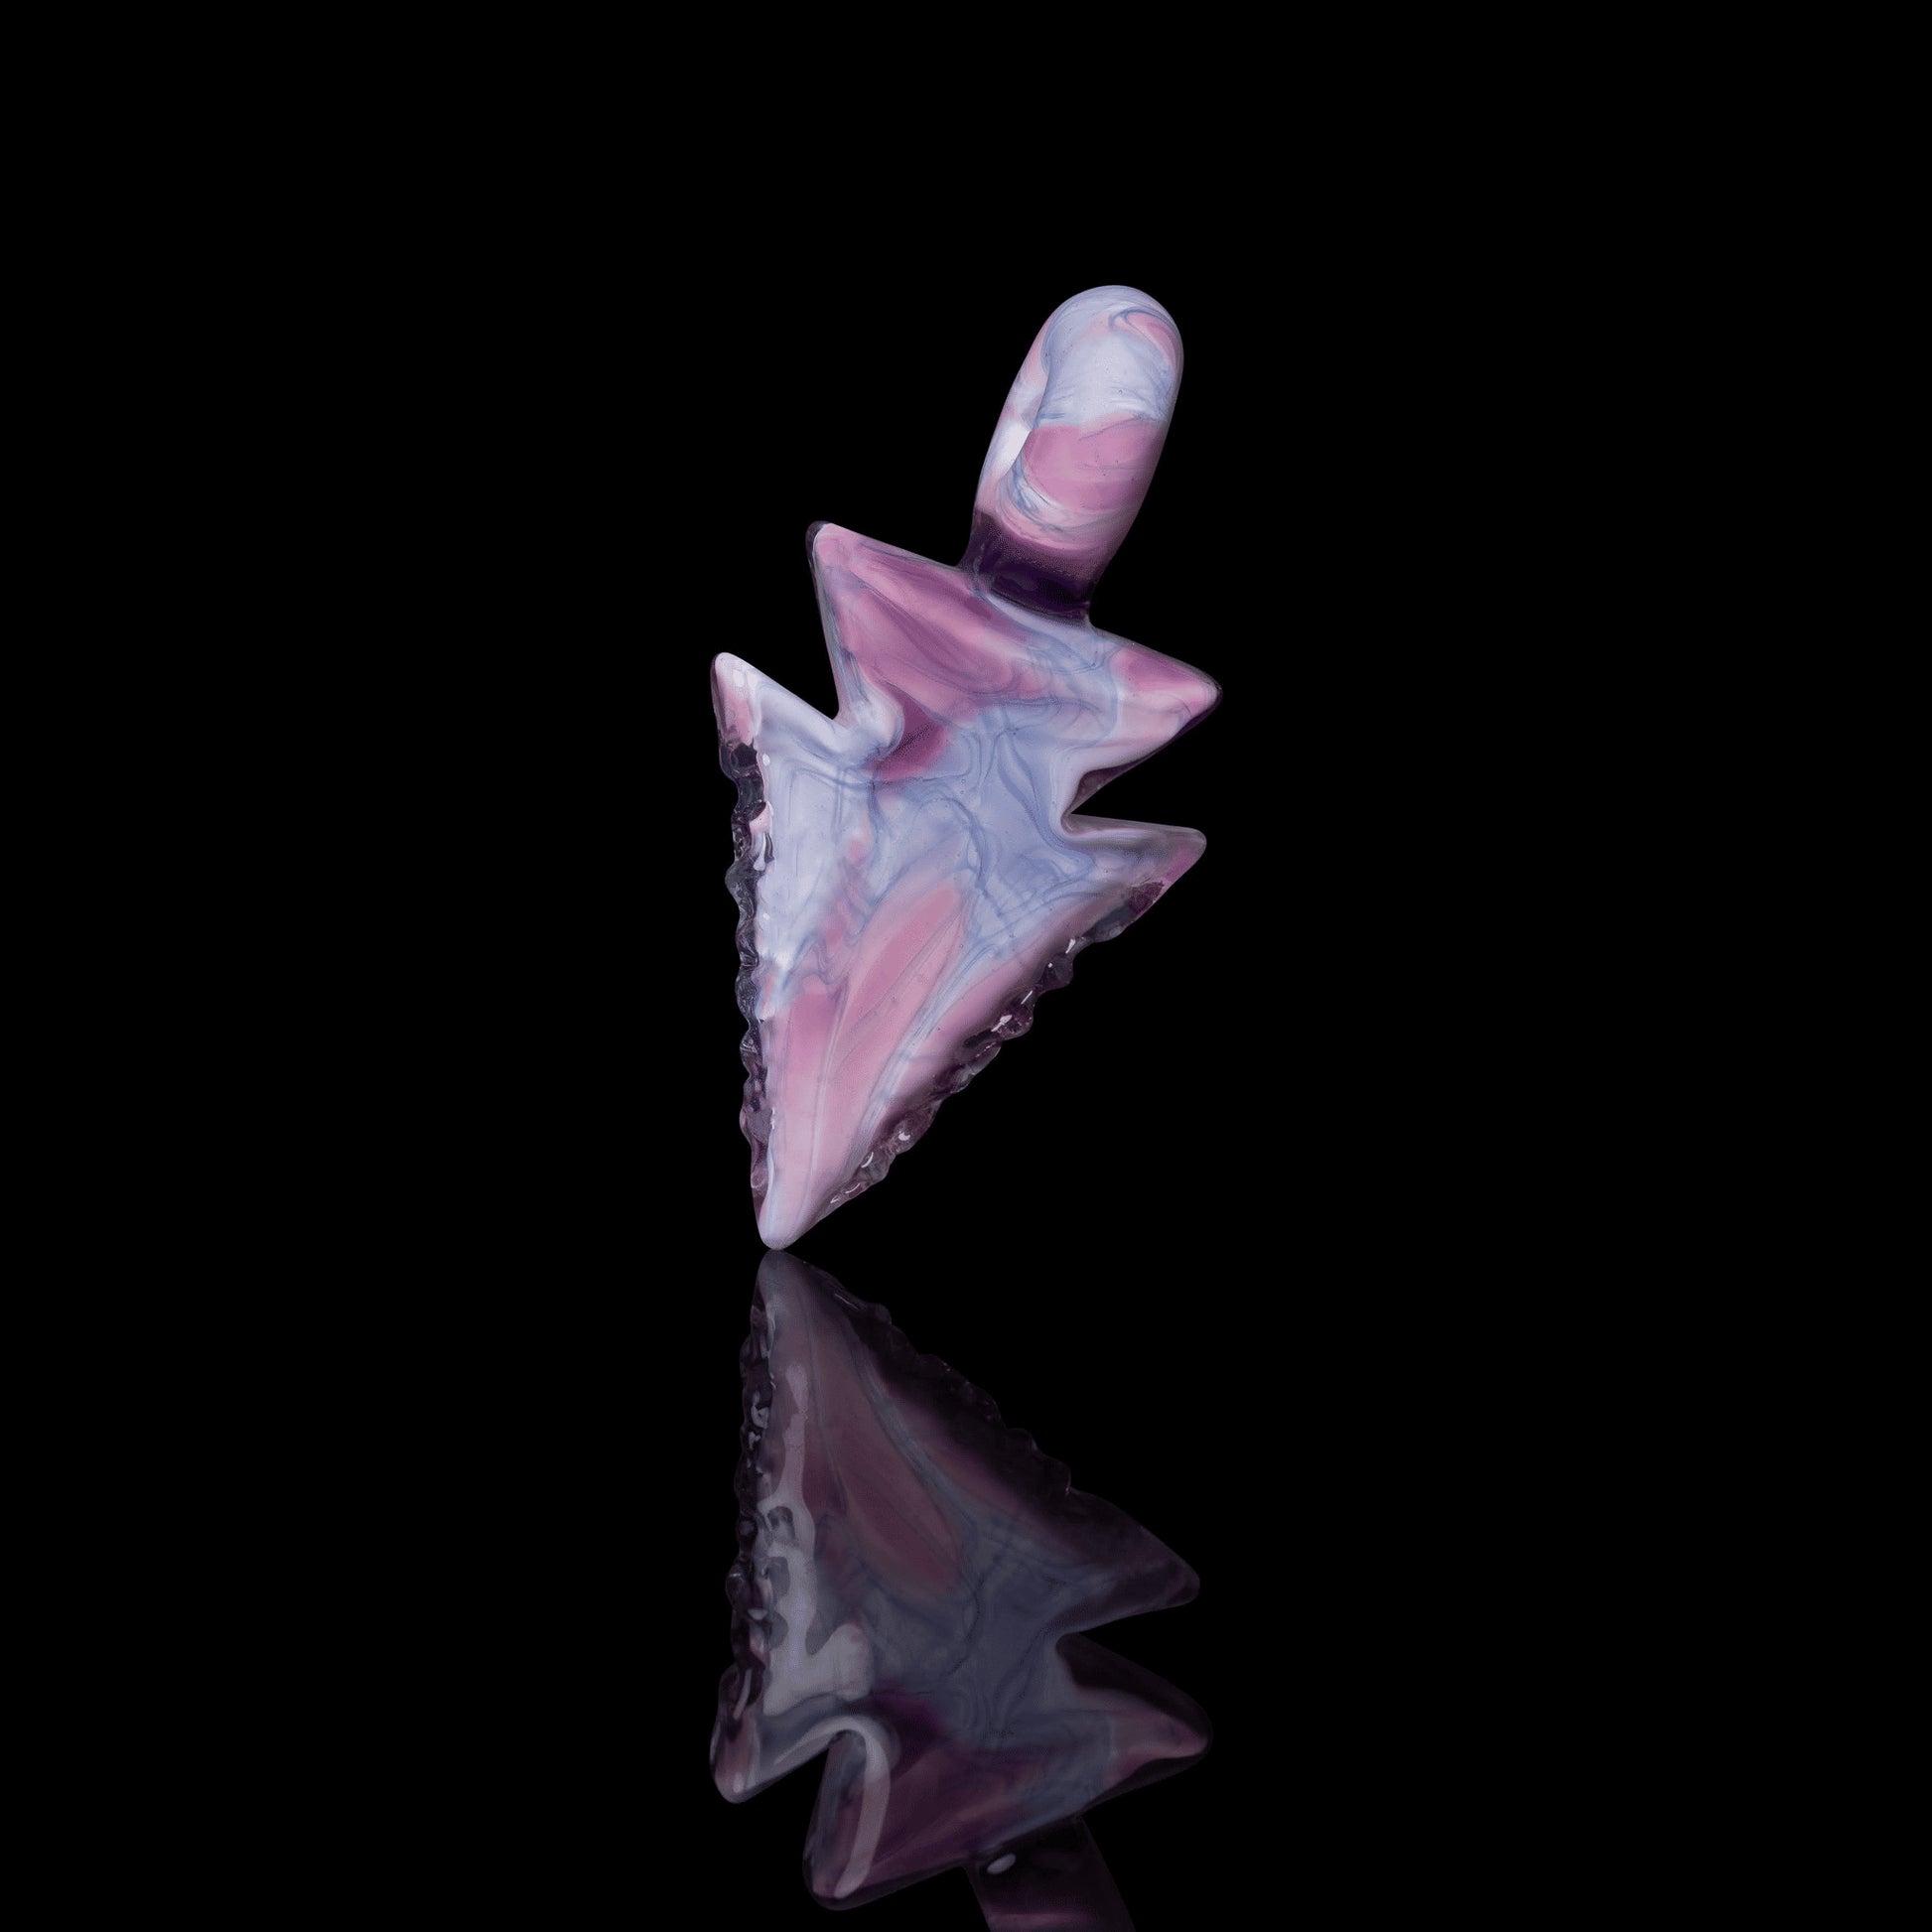 exquisite glass pendant - Collab Arrowhead Pendant (E) by Elks That Run x Scomo Moanet (Scribble Season 2022)